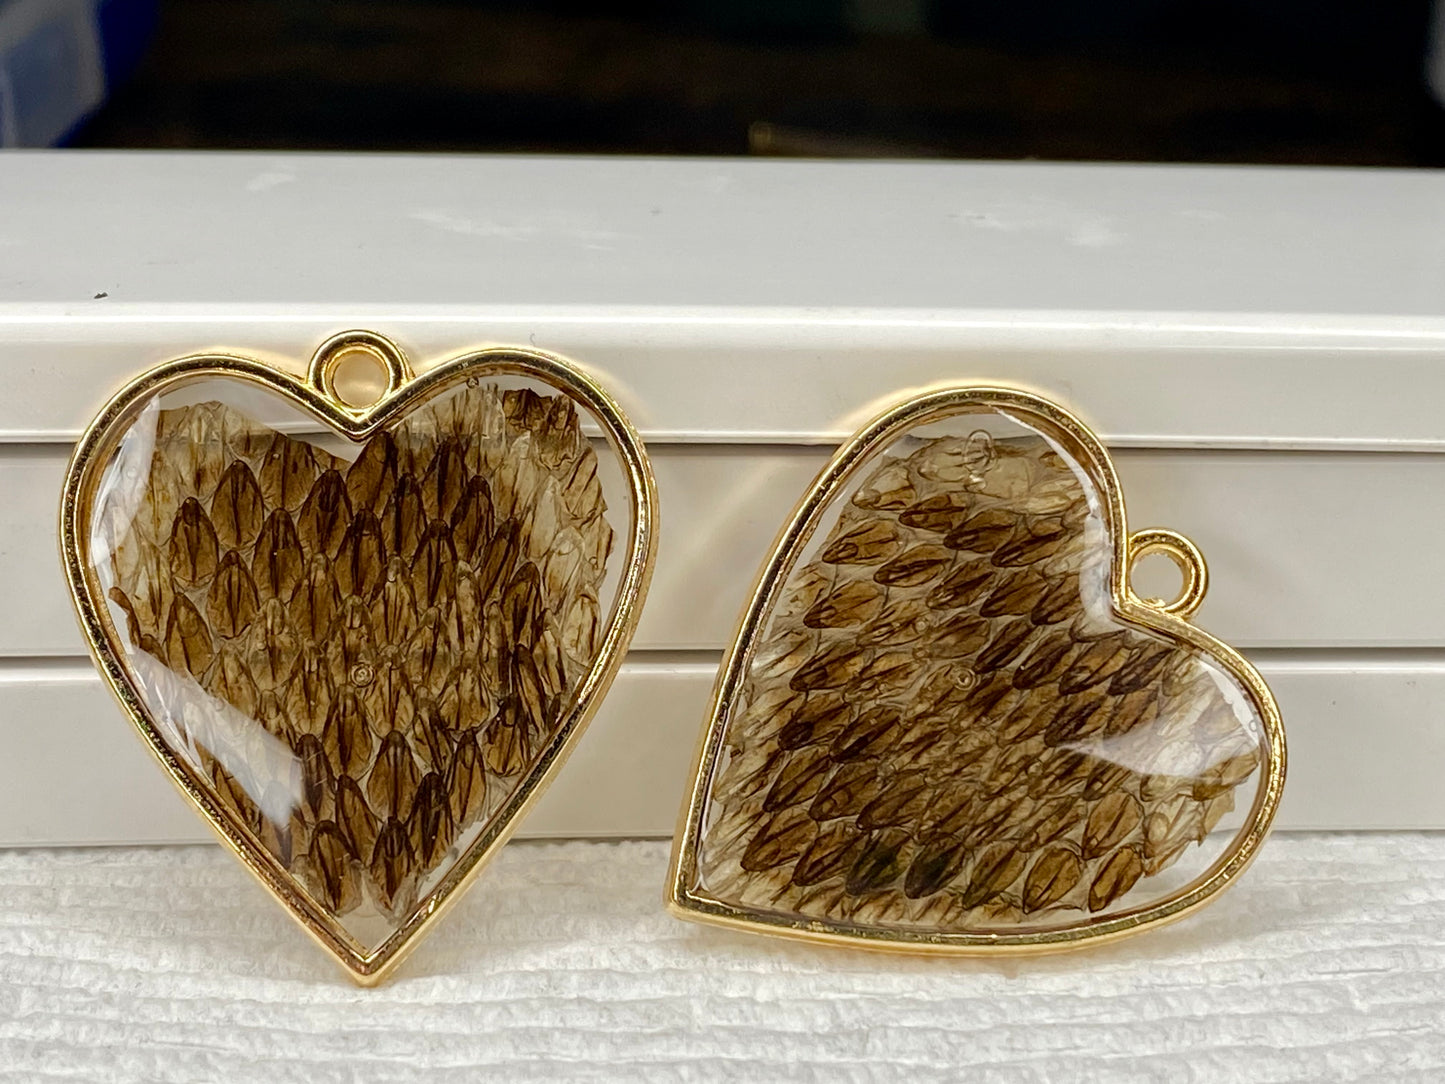 Eastern Diamondback Gold Heart 1030